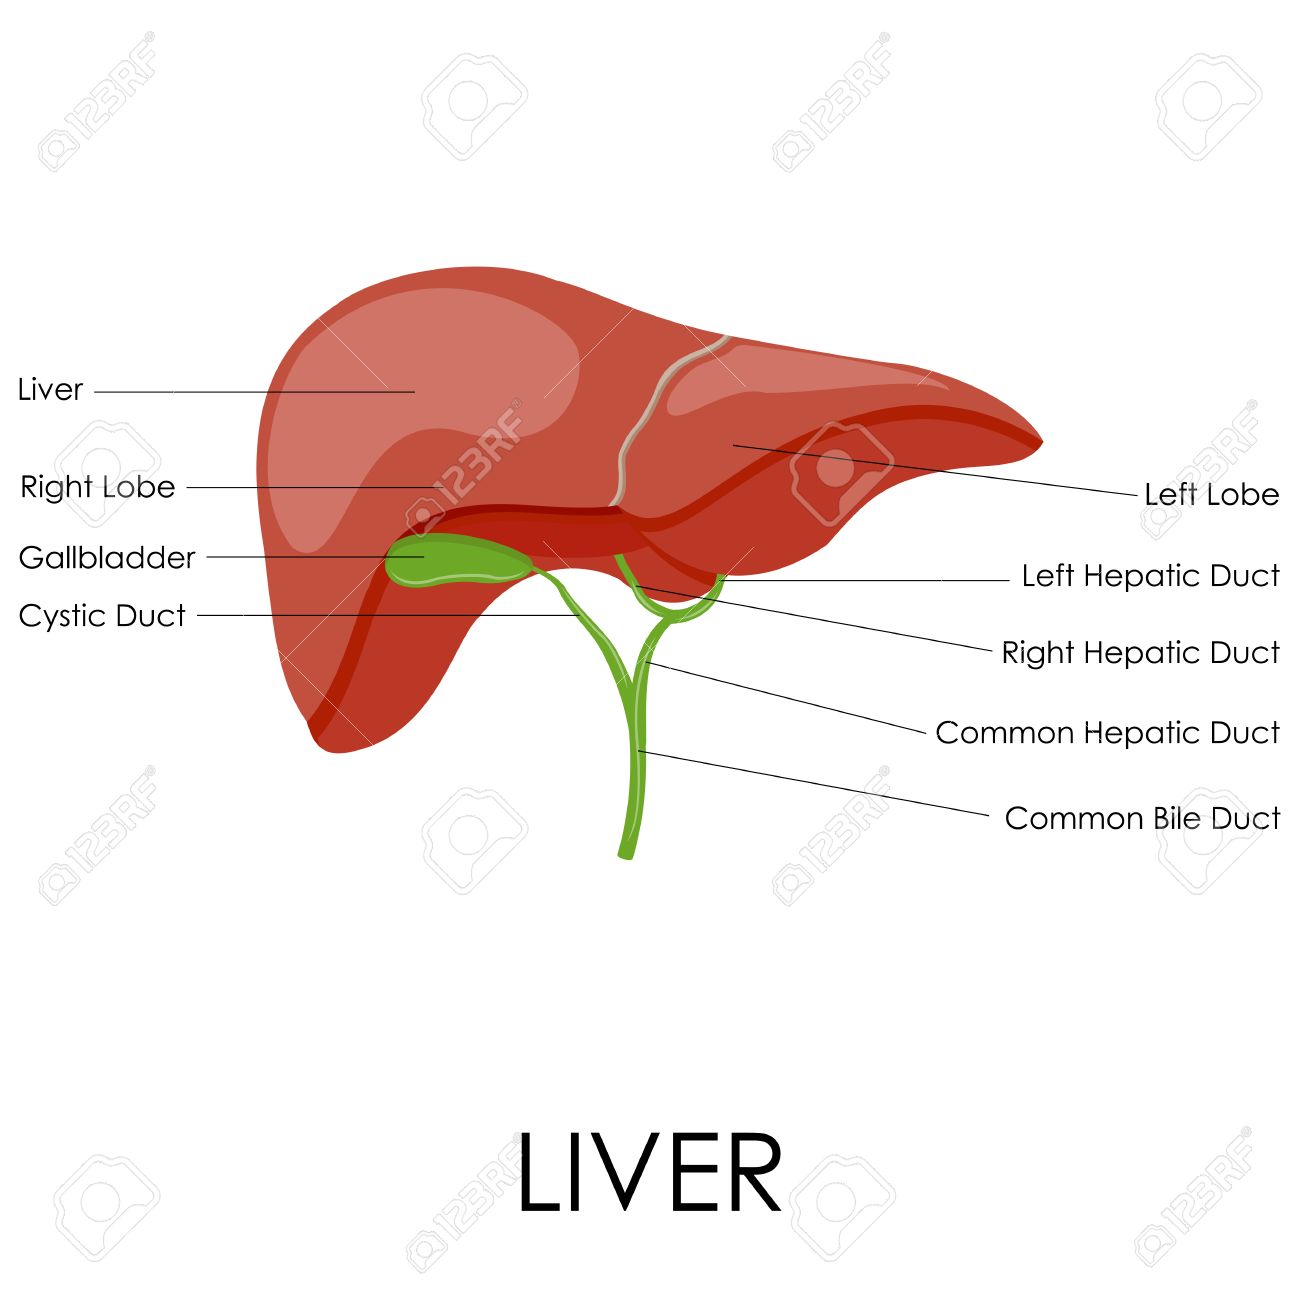 Human Liver Drawing at GetDrawings | Free download